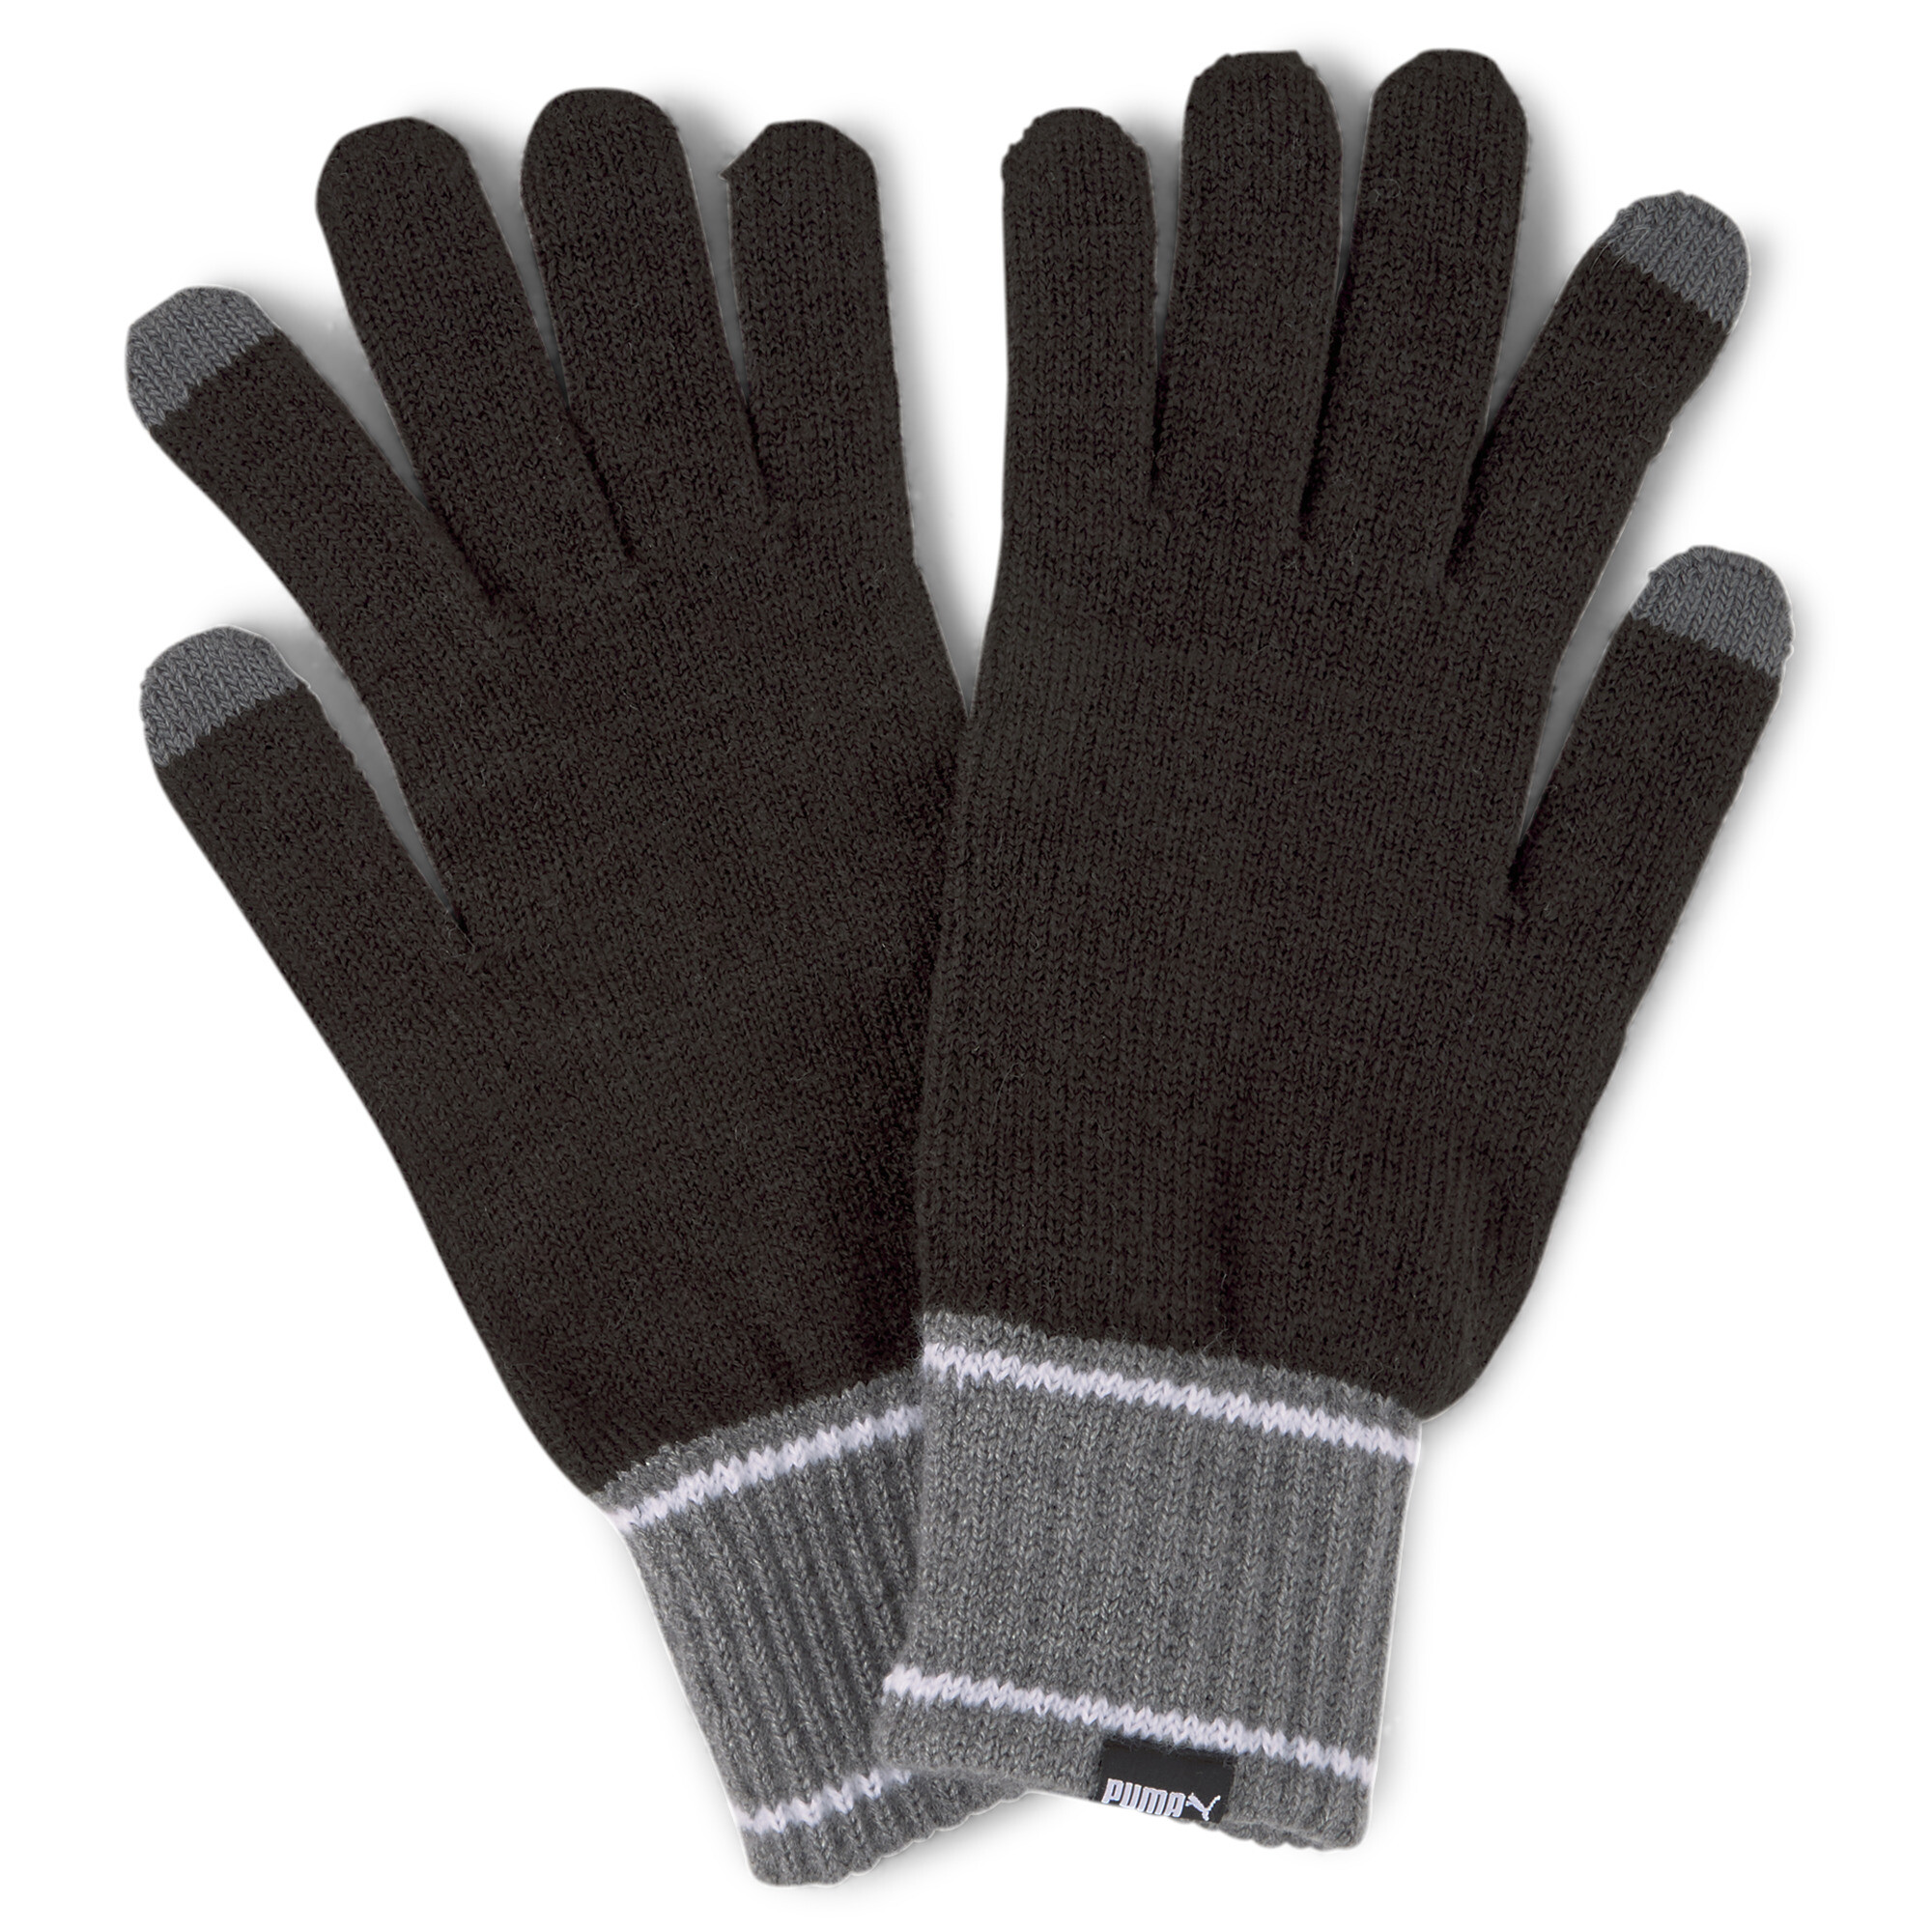 Puma Knitted Gloves, Black, Size L/XL, Accessories